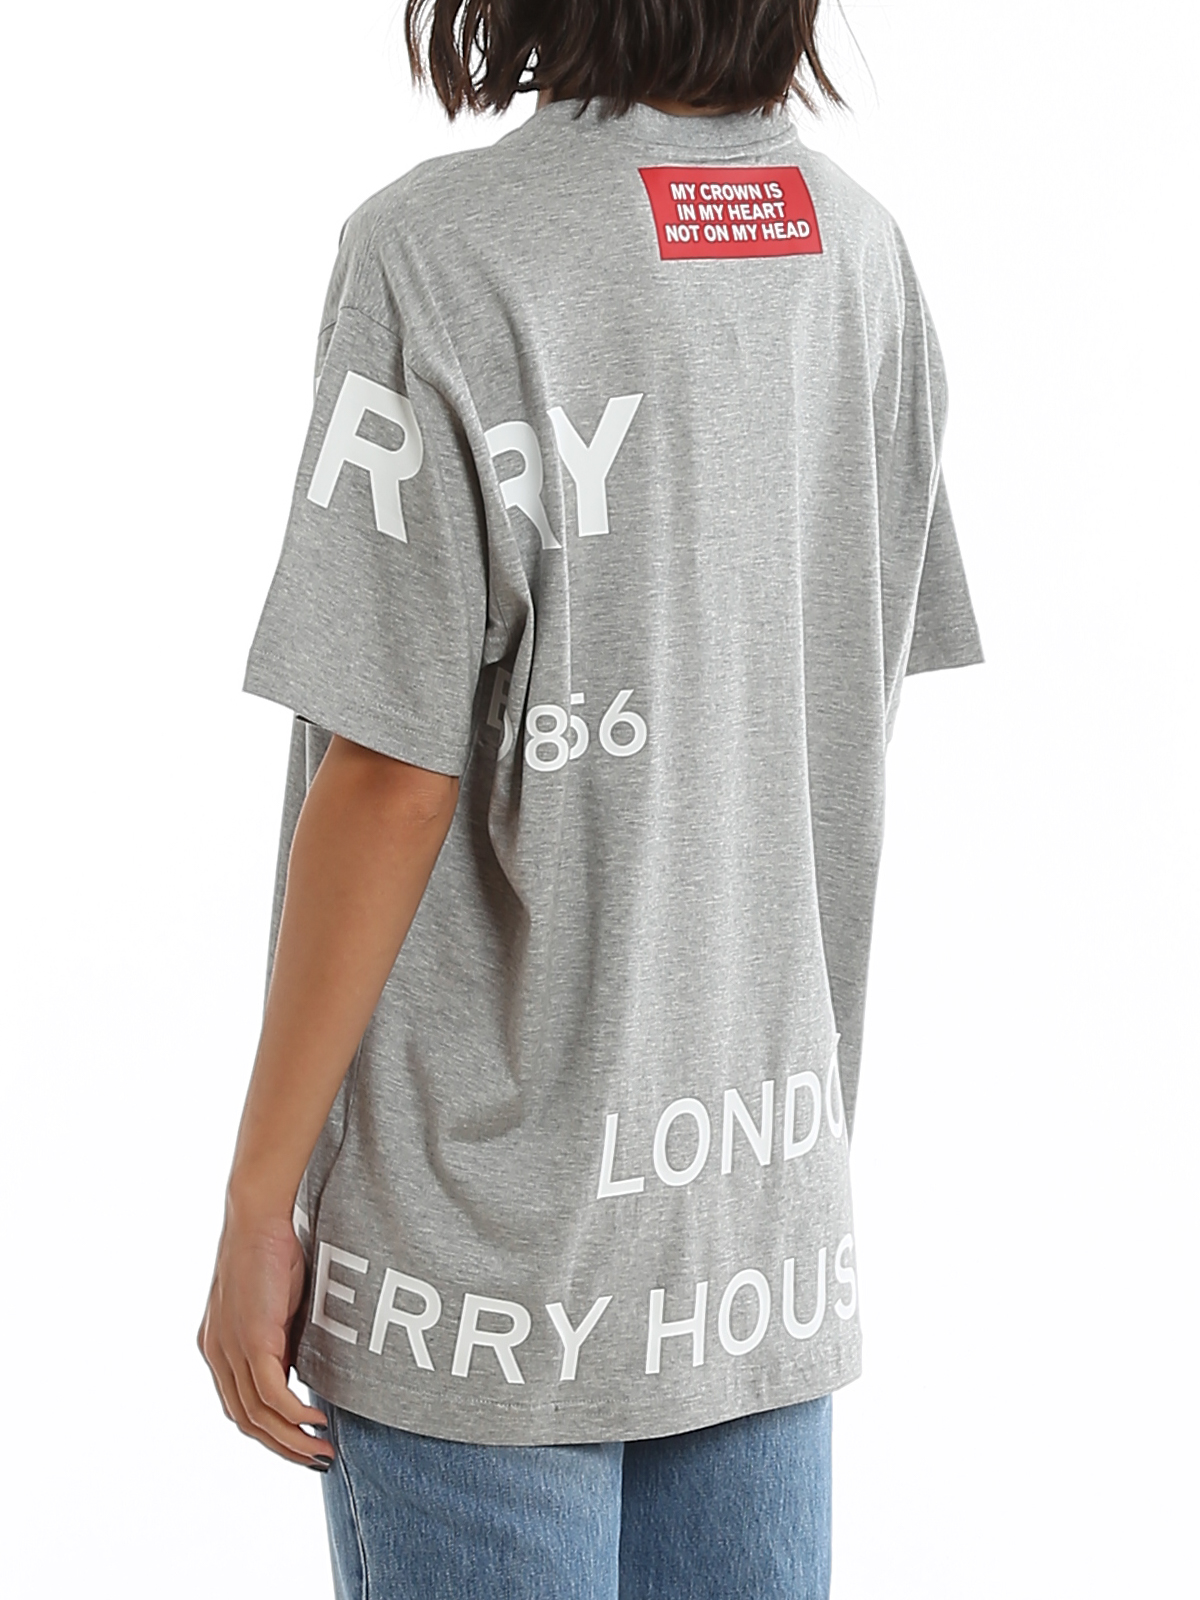 T-shirts Burberry - Carrick T-shirt - 8028904 | Shop online at iKRIX